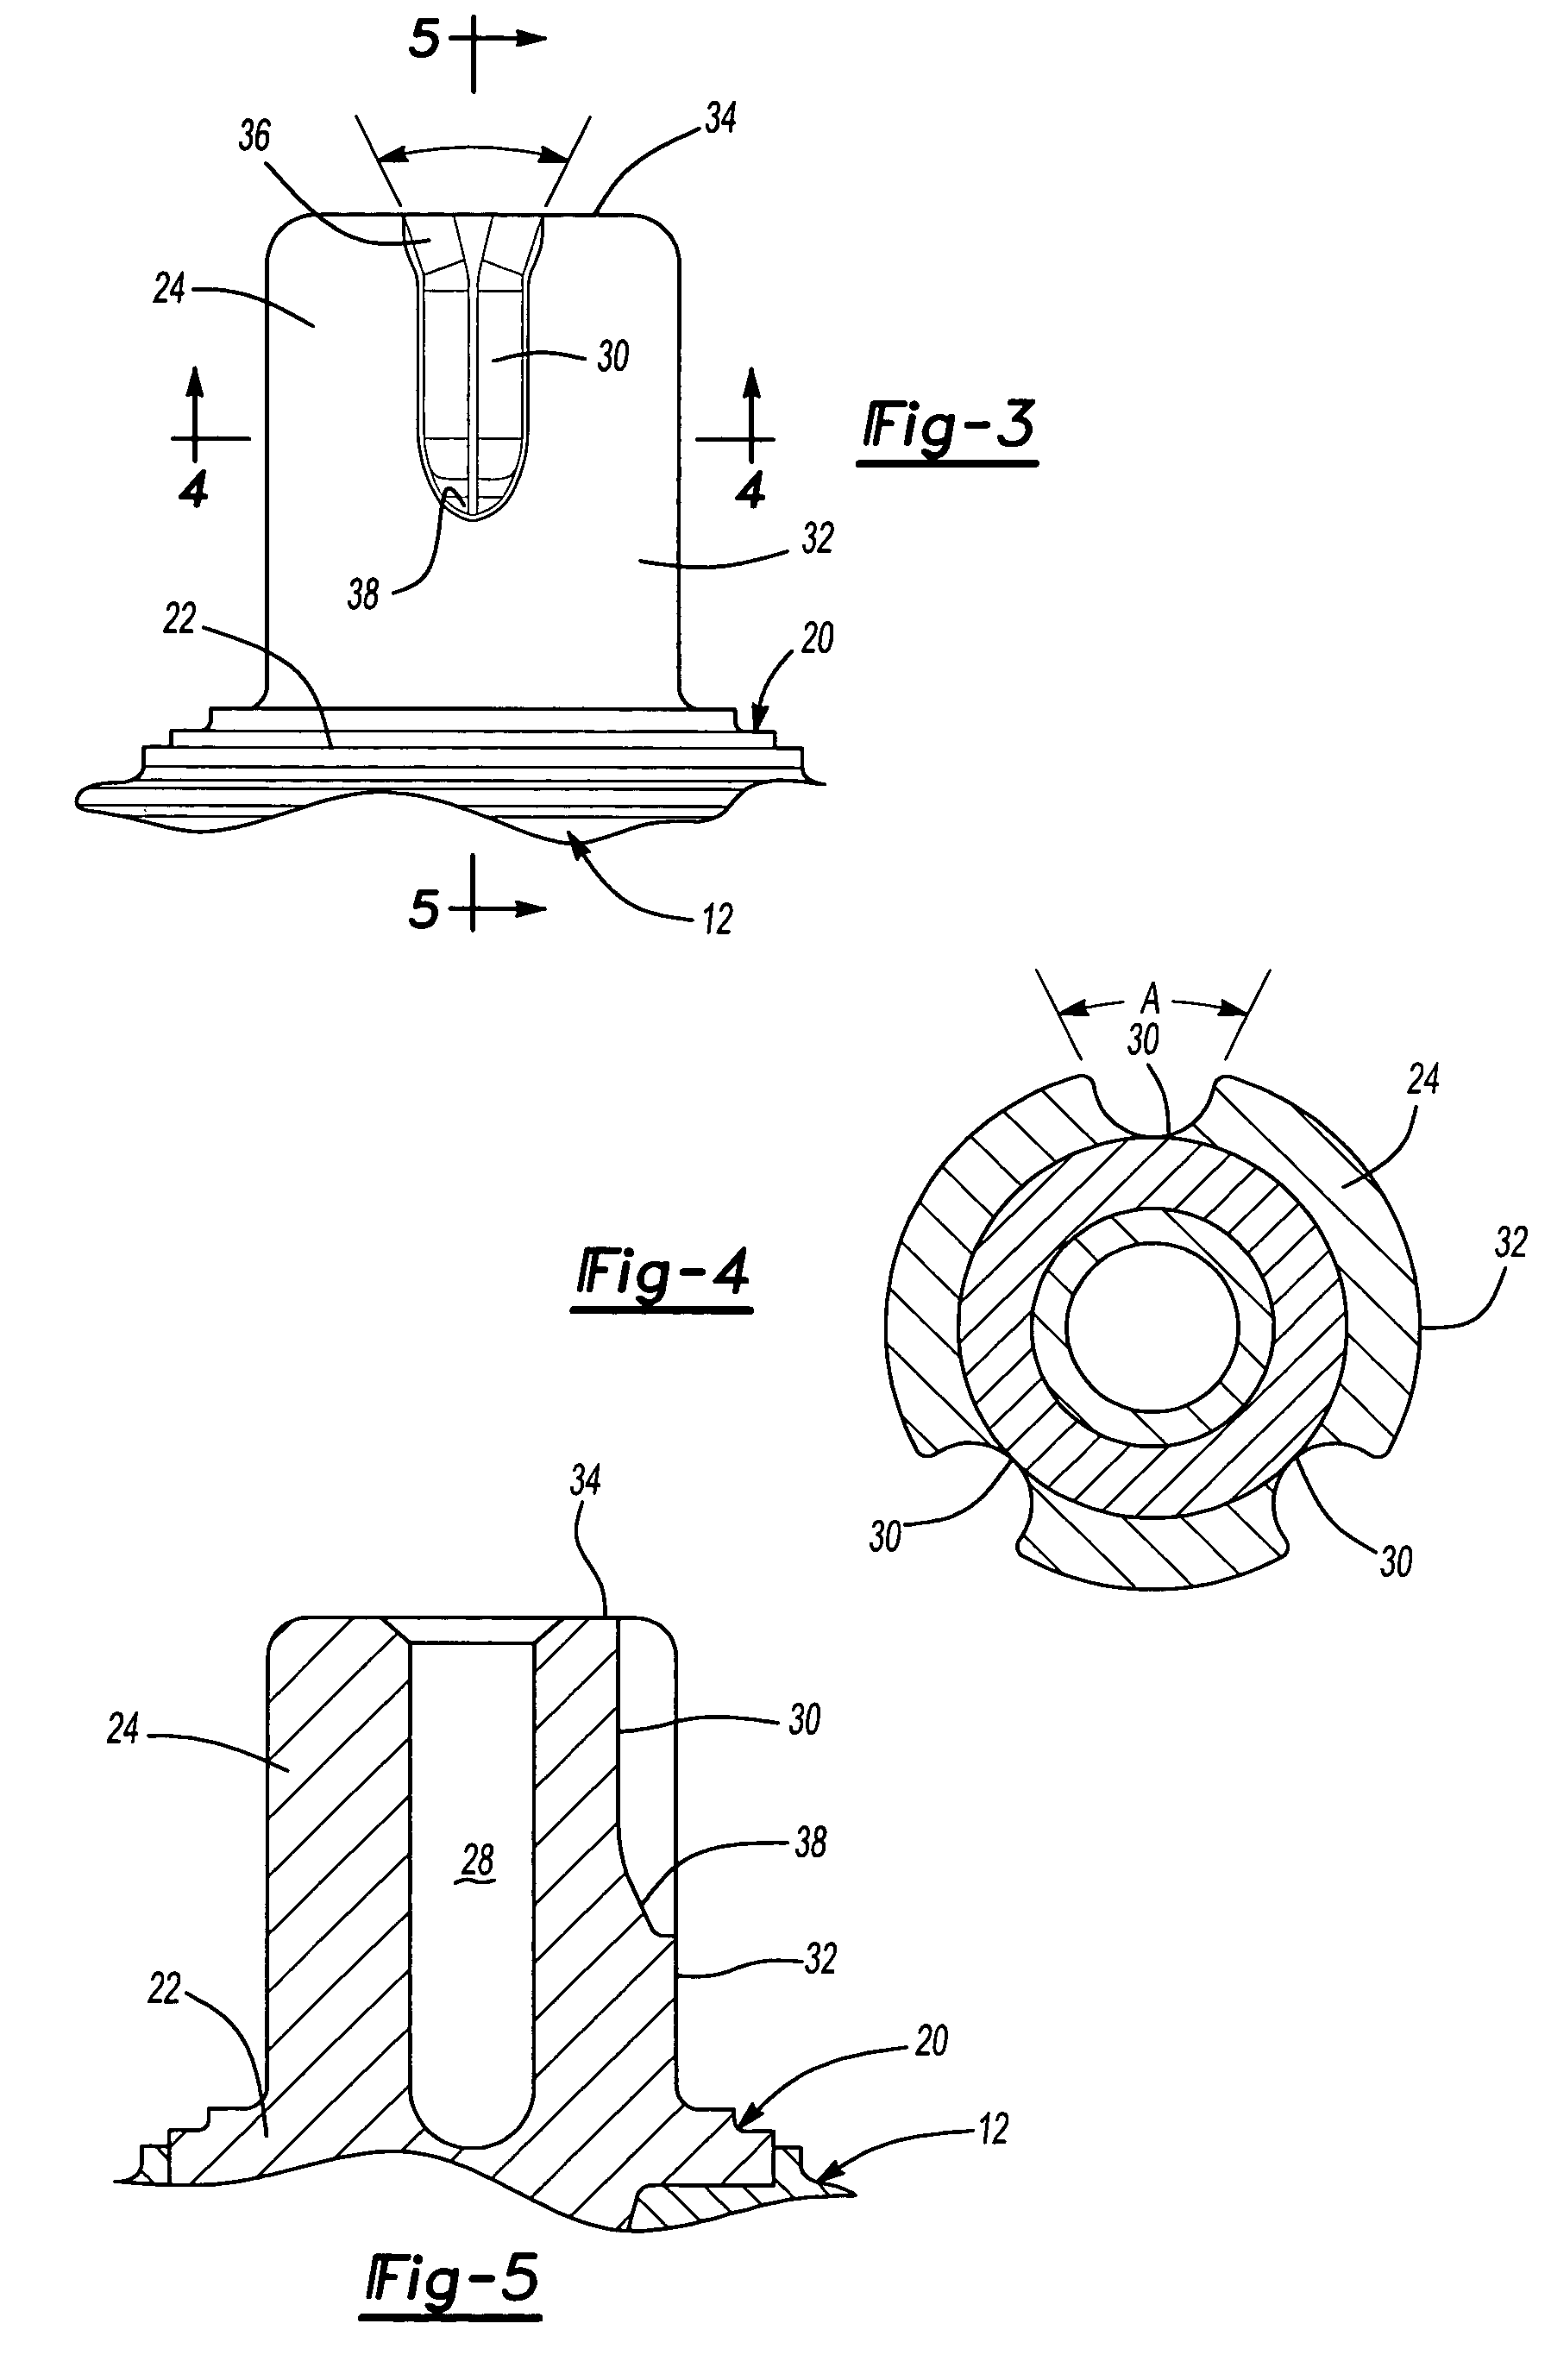 Stem construction for rotatable valve body